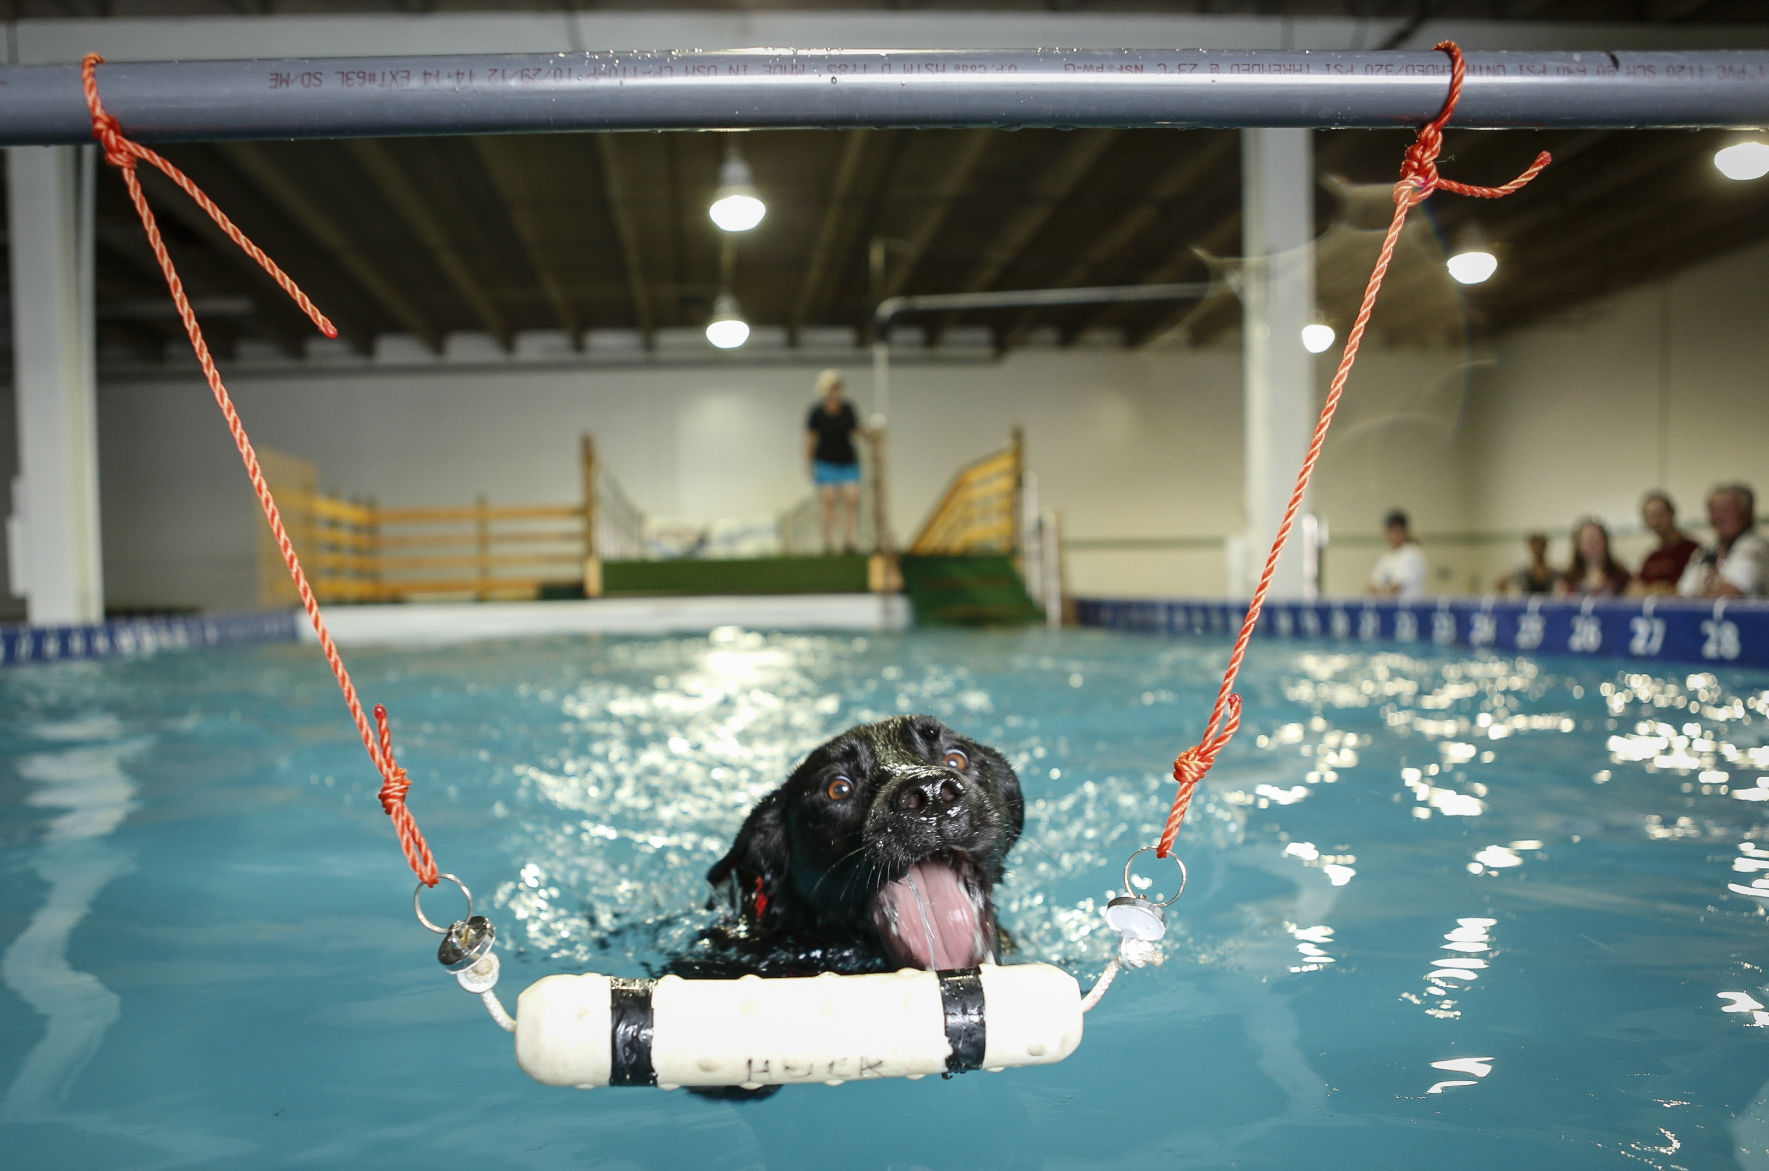 Canine swim center helps promote safe 